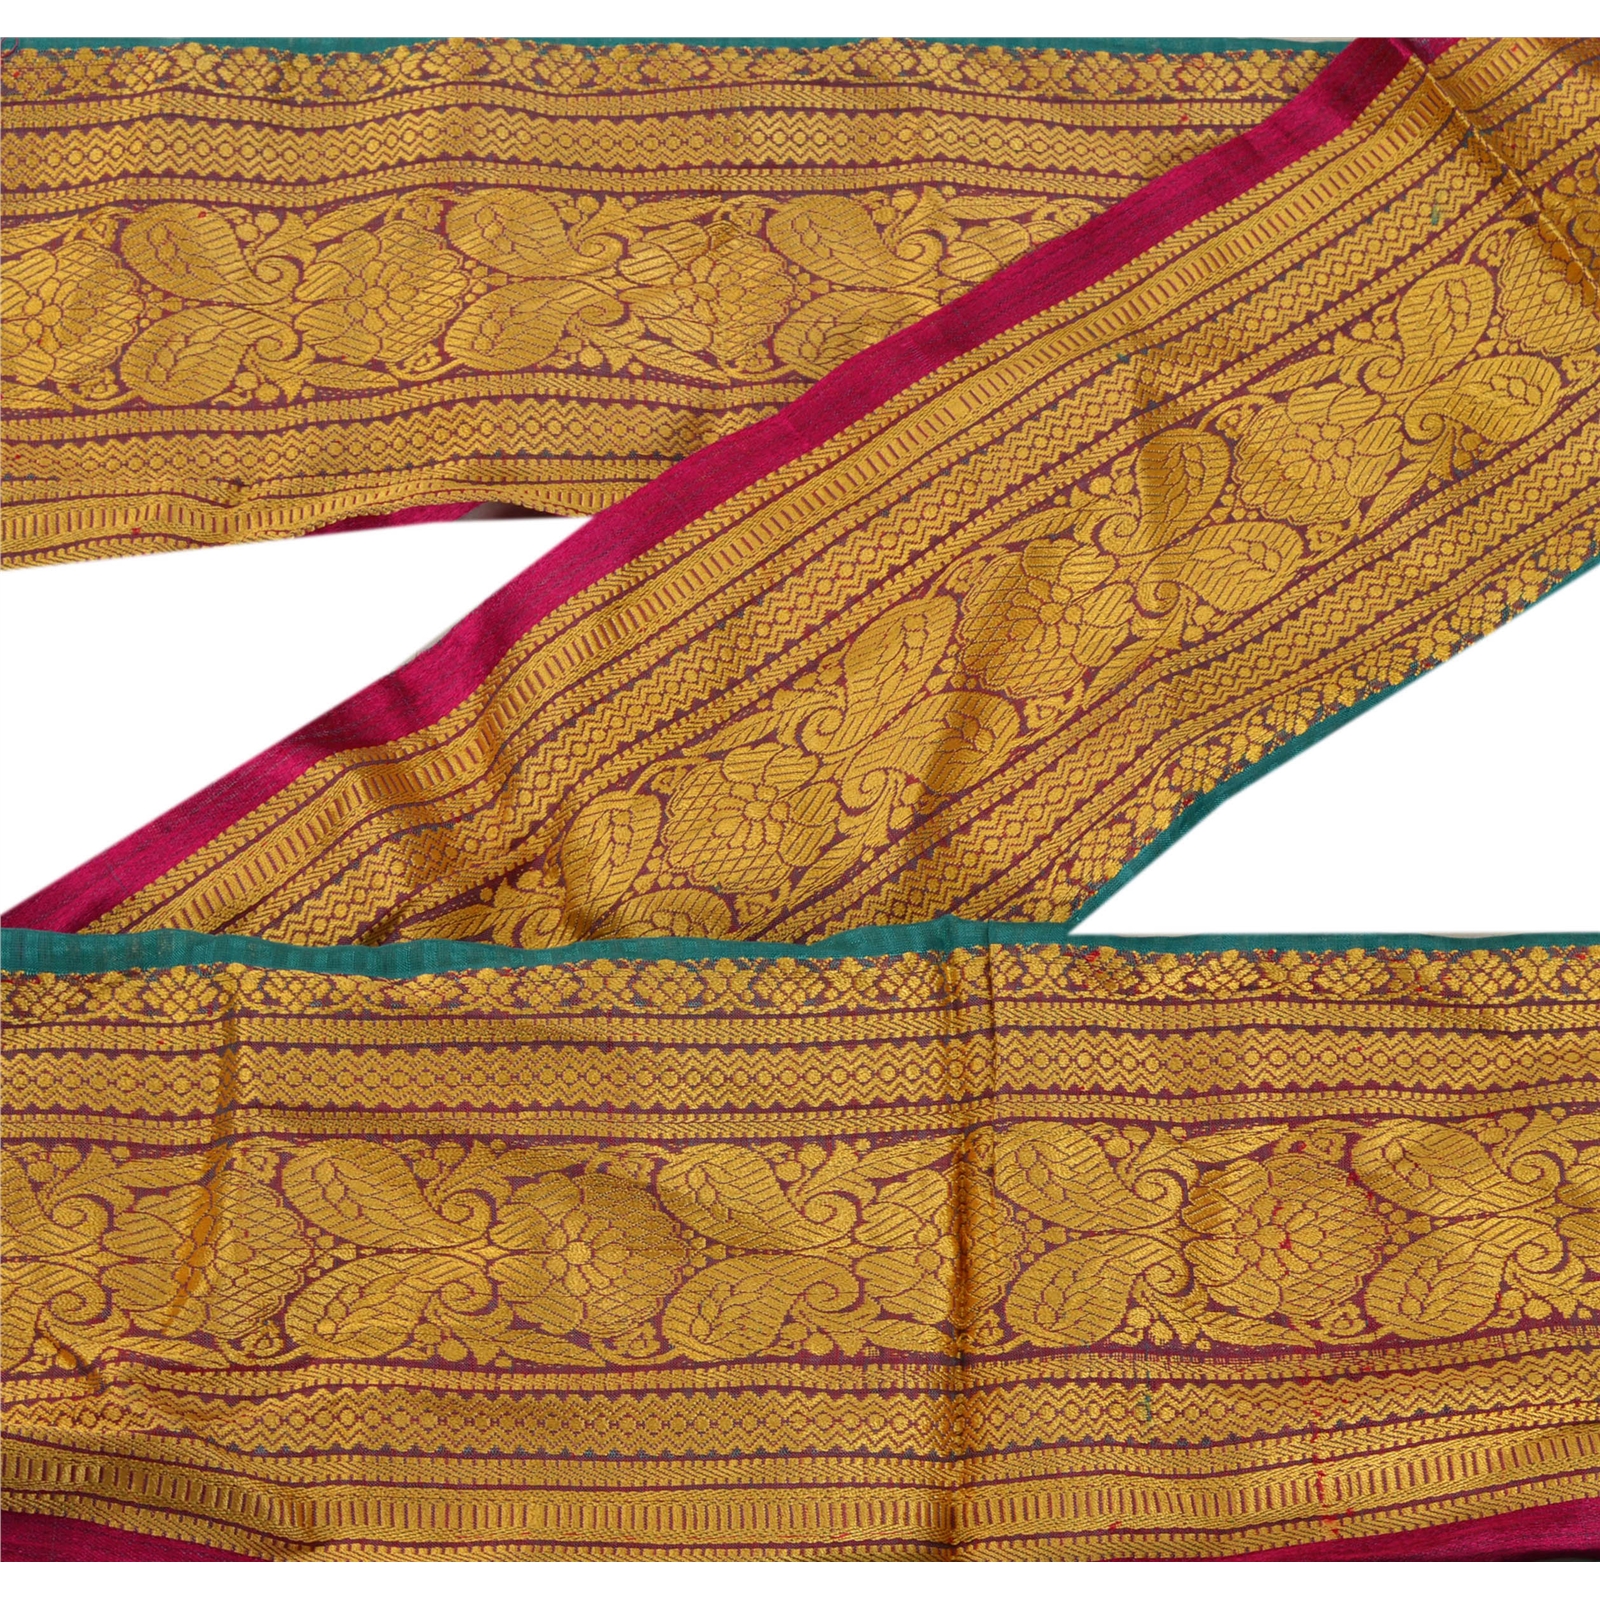 Sanskriti Vintage Decor Sari Border Hand Embroidered Trim Sewing Craft Pink Lace